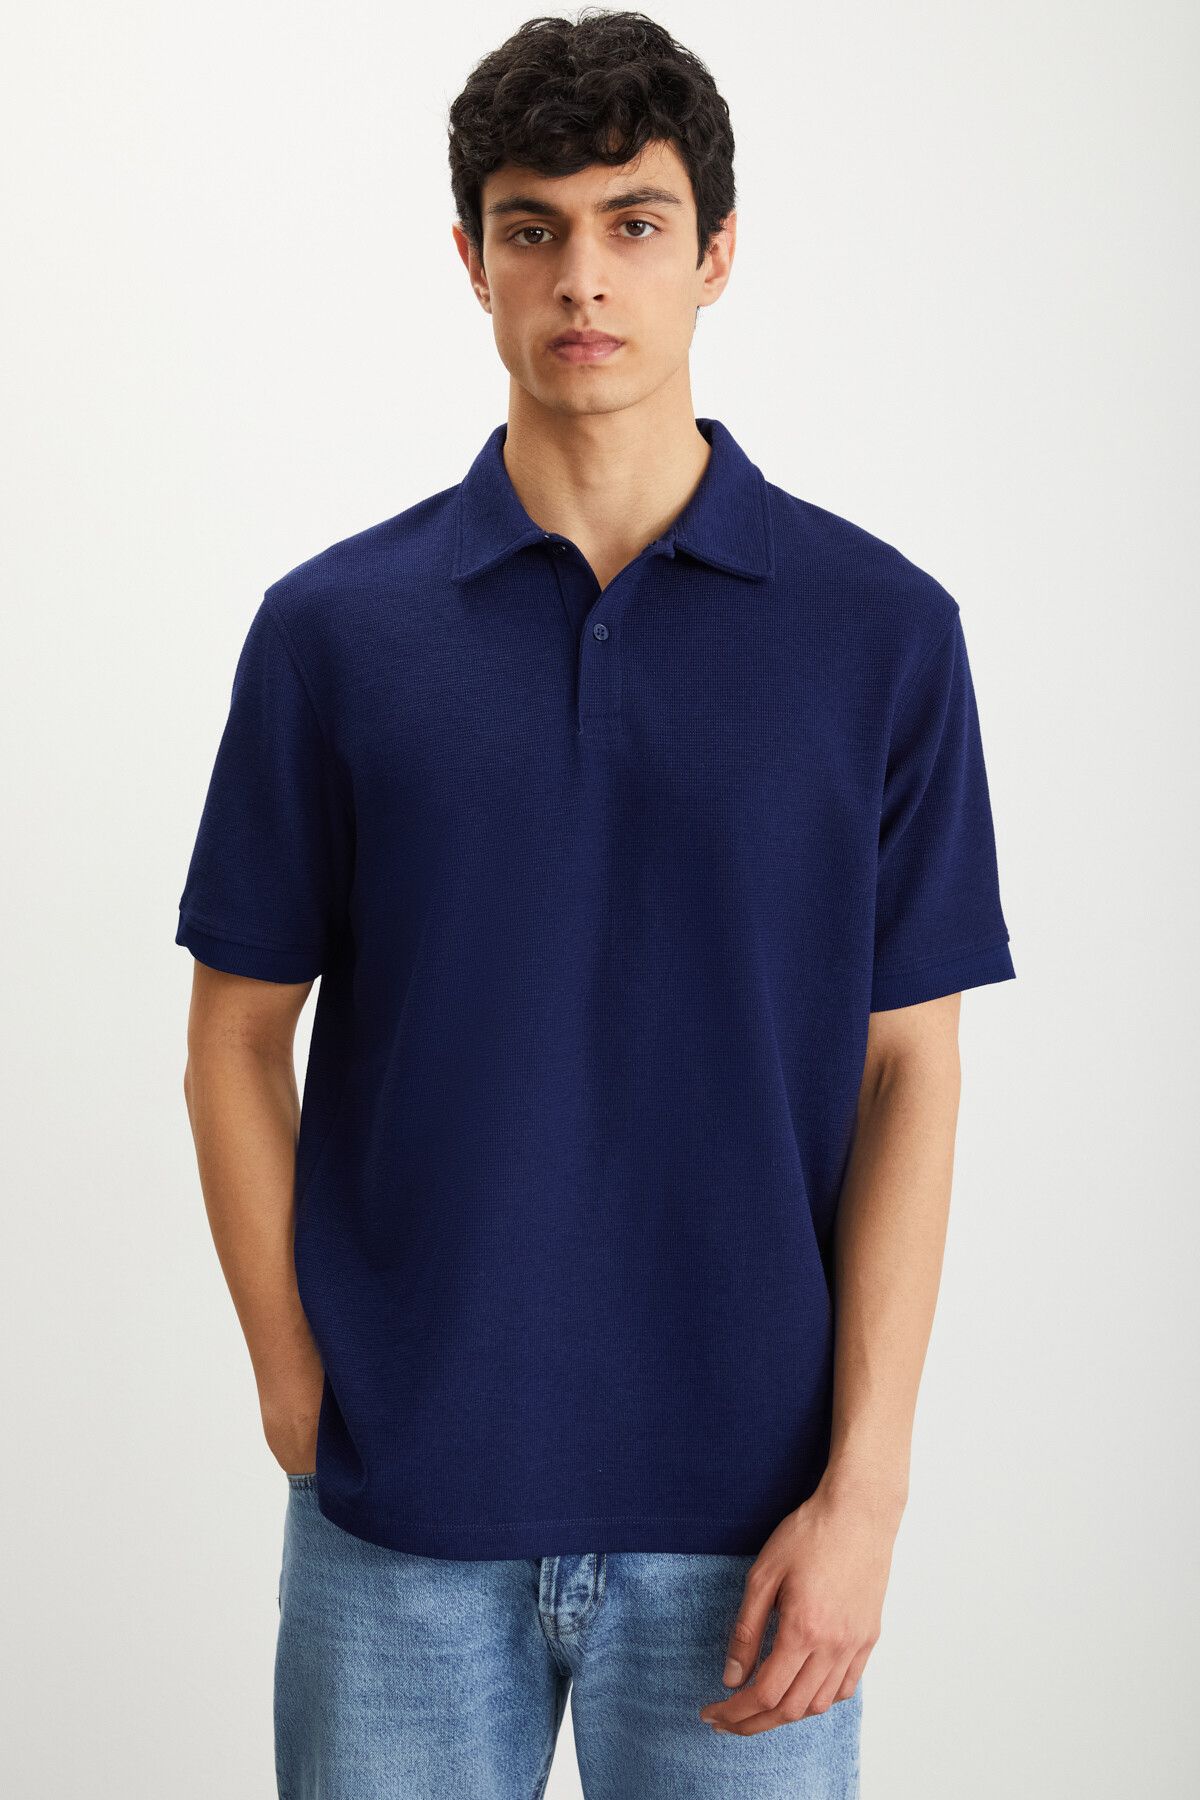 GRIMELANGE Laporte Erkek Dokulu Kumaşlı Slim Fit Lacivert Polo Yaka T-shirt